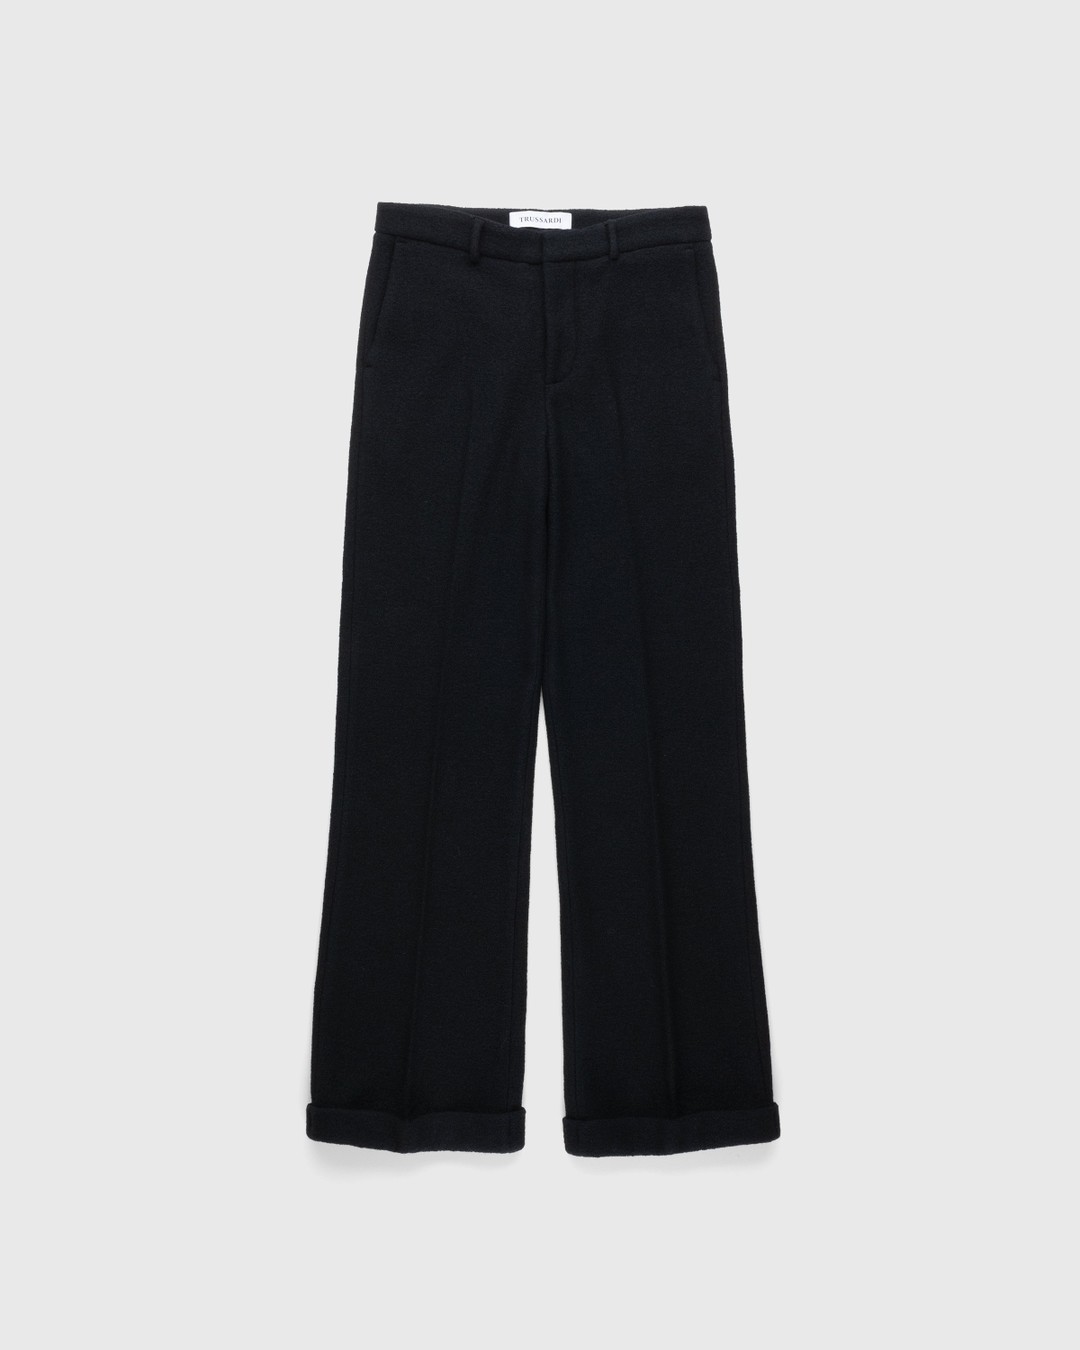 Trussardi – Boucle Jersey Trousers Black - Pants - Black - Image 1